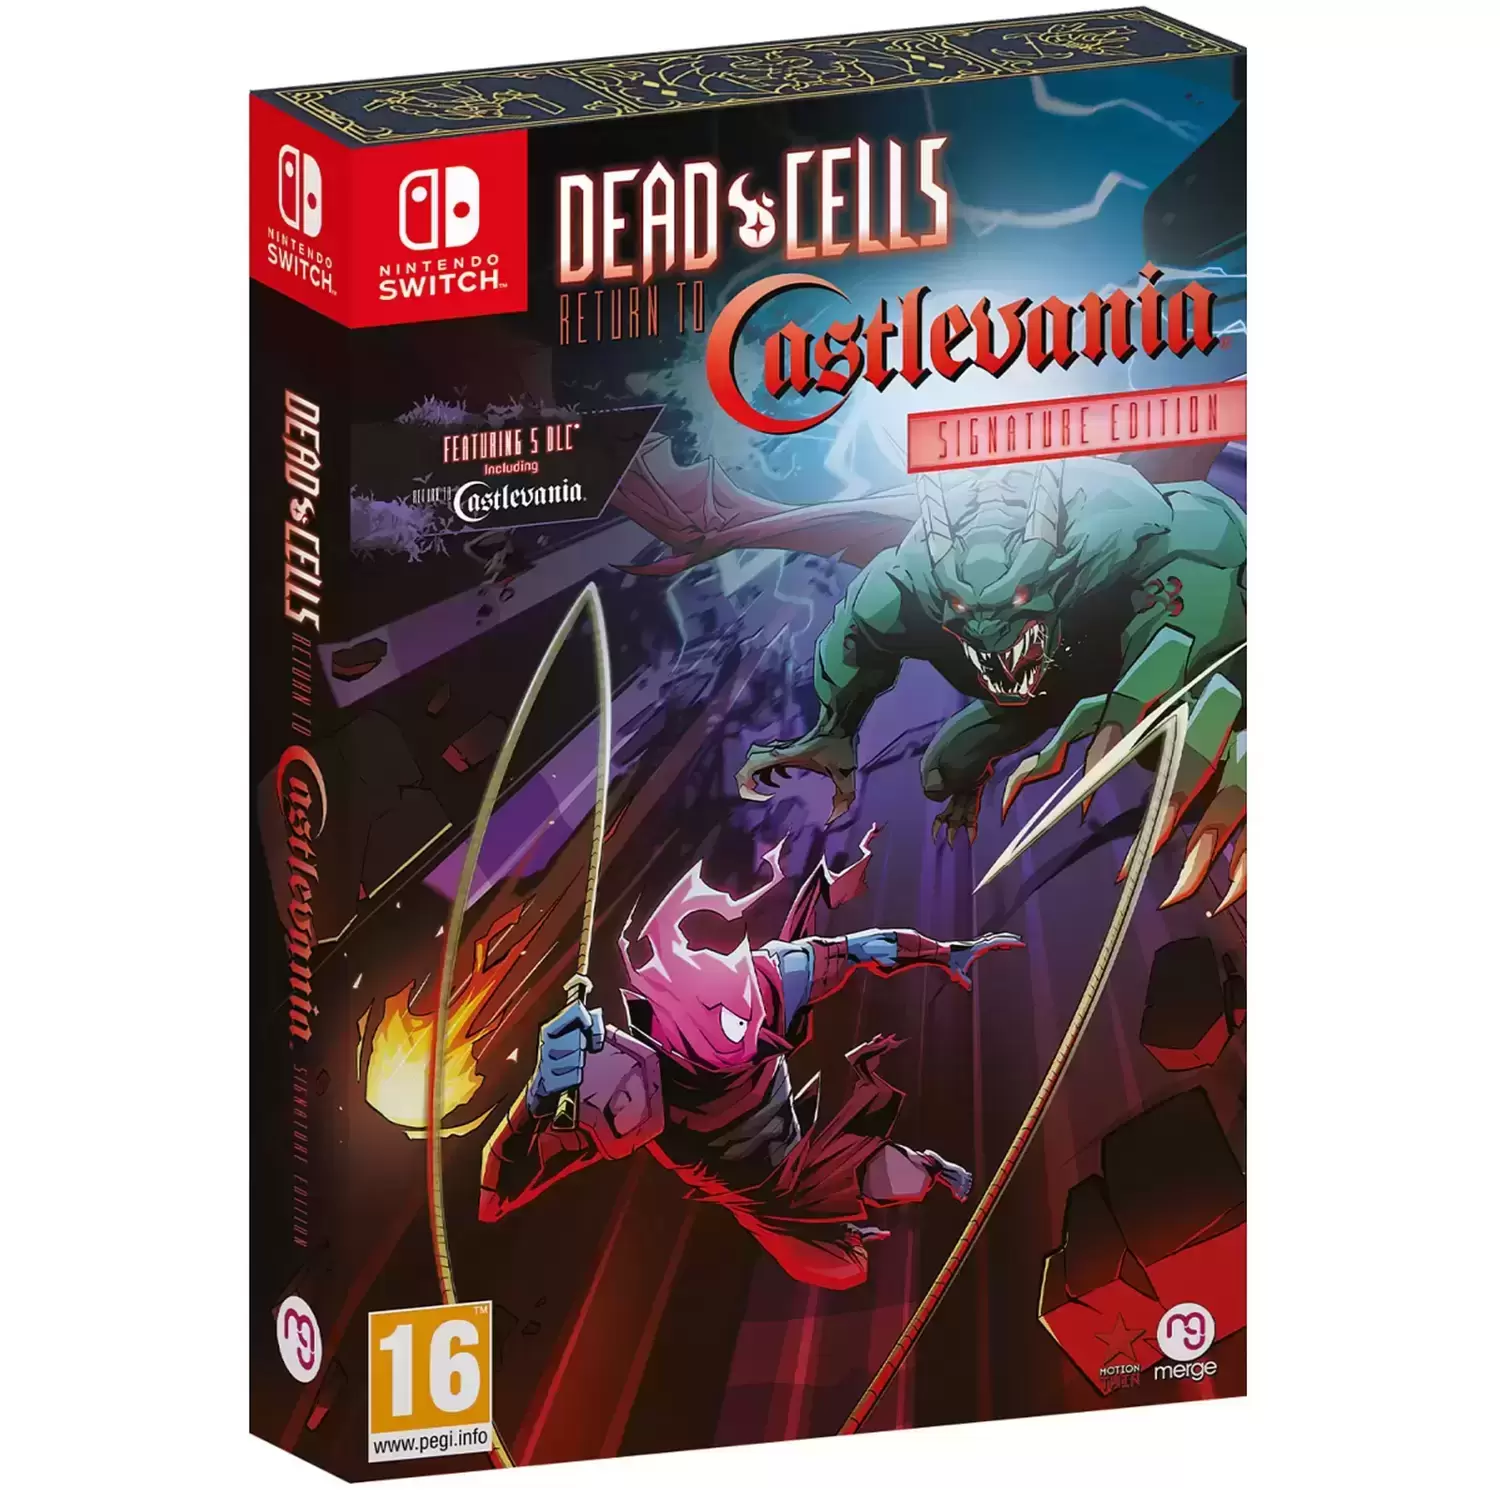 Nintendo Switch Games - Dead Cells Return in  Castlevania Signature Edition